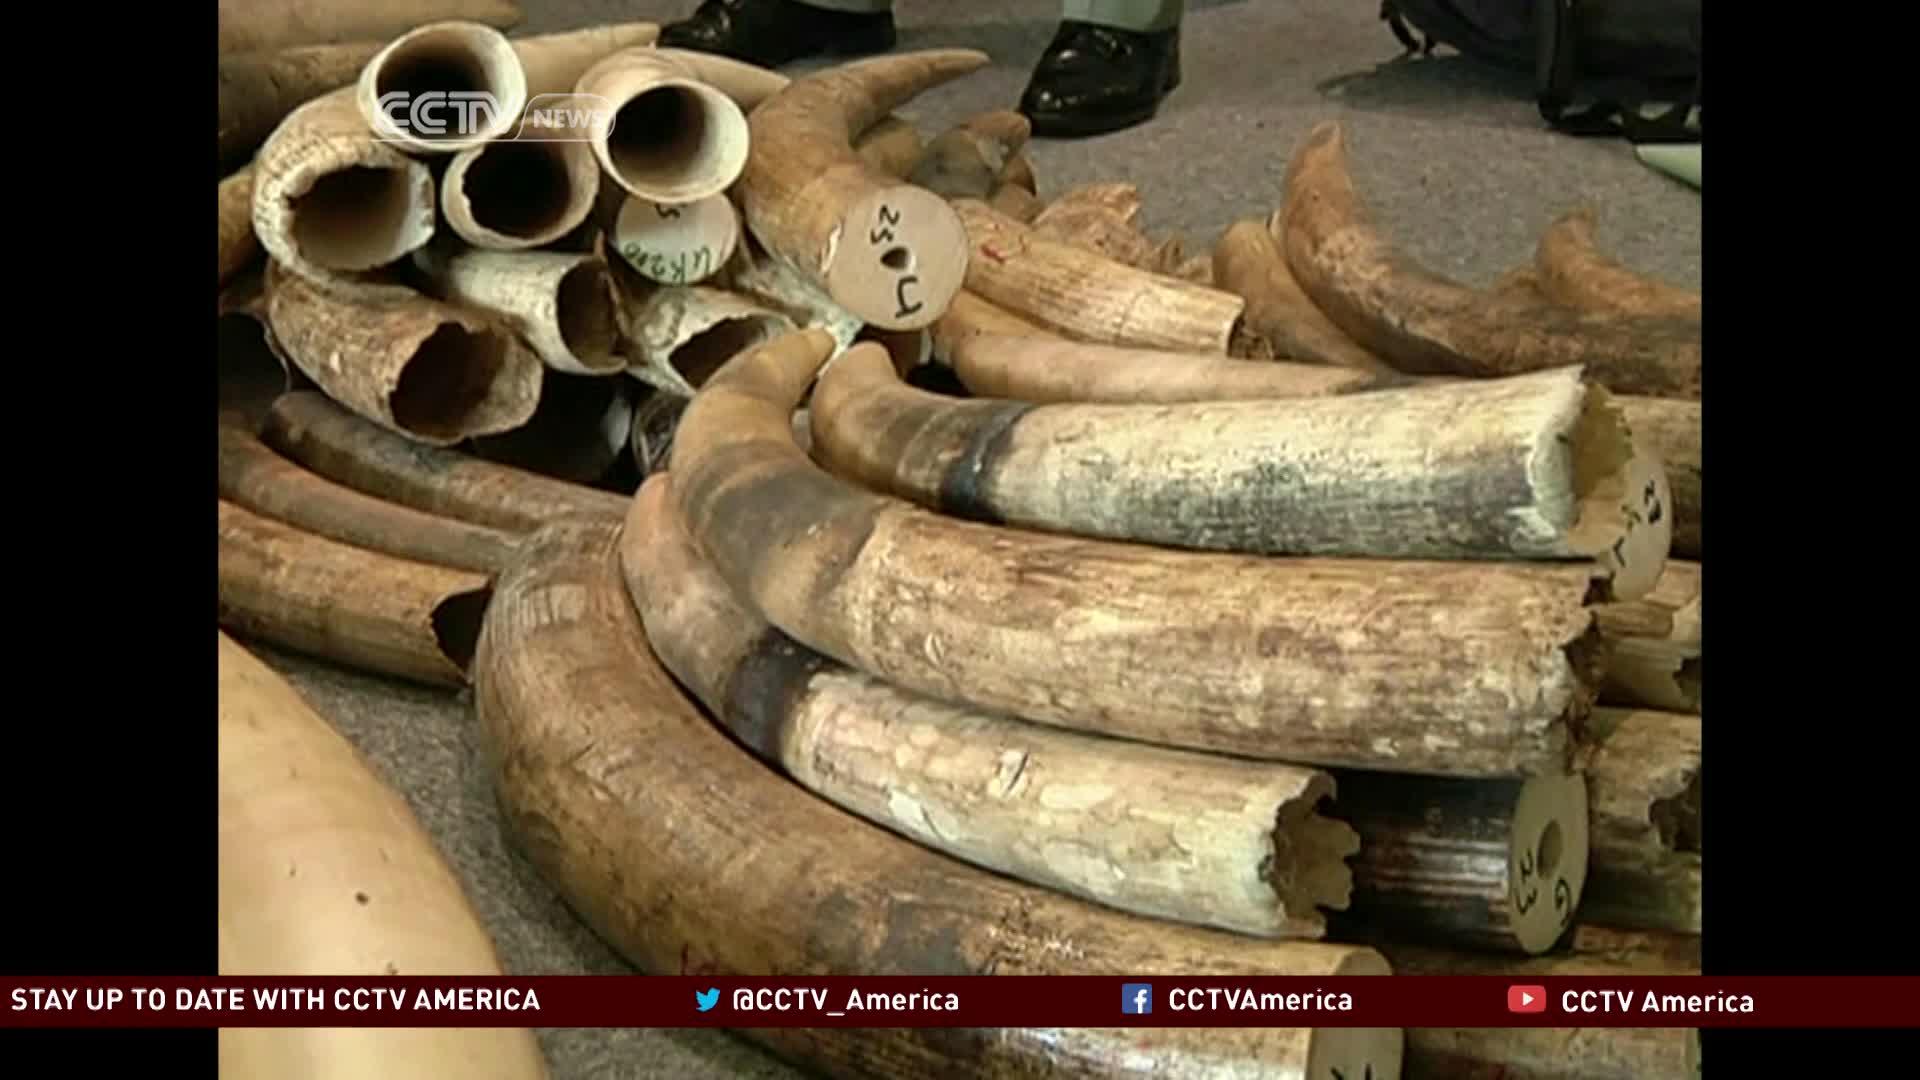 Wildlife protection: China makes efforts to discourage ivory use